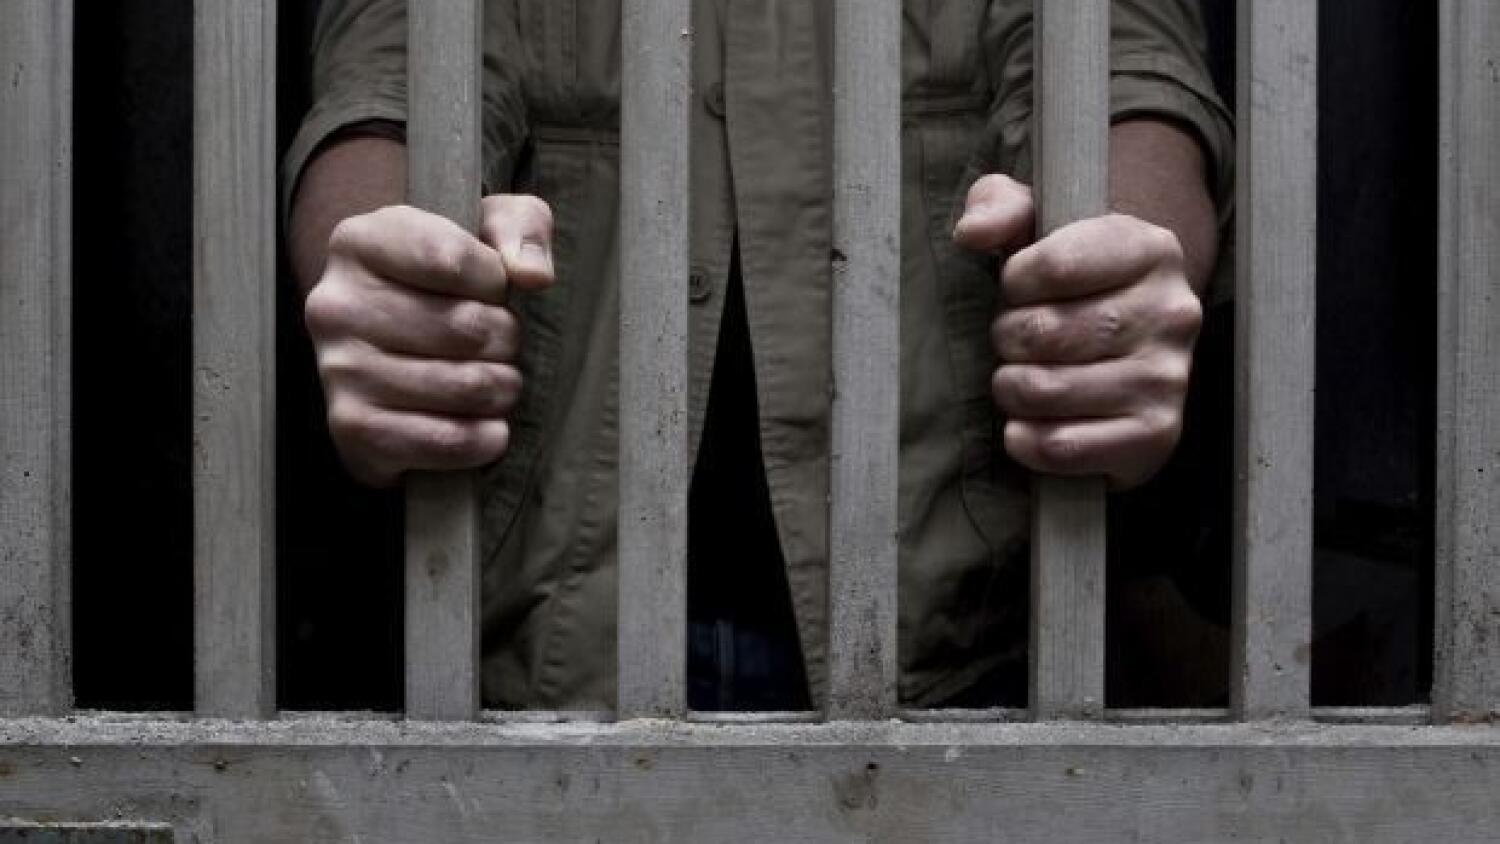 Dubai issues Dh15 million fines, jails 9 for money laundering - News |  Khaleej Times